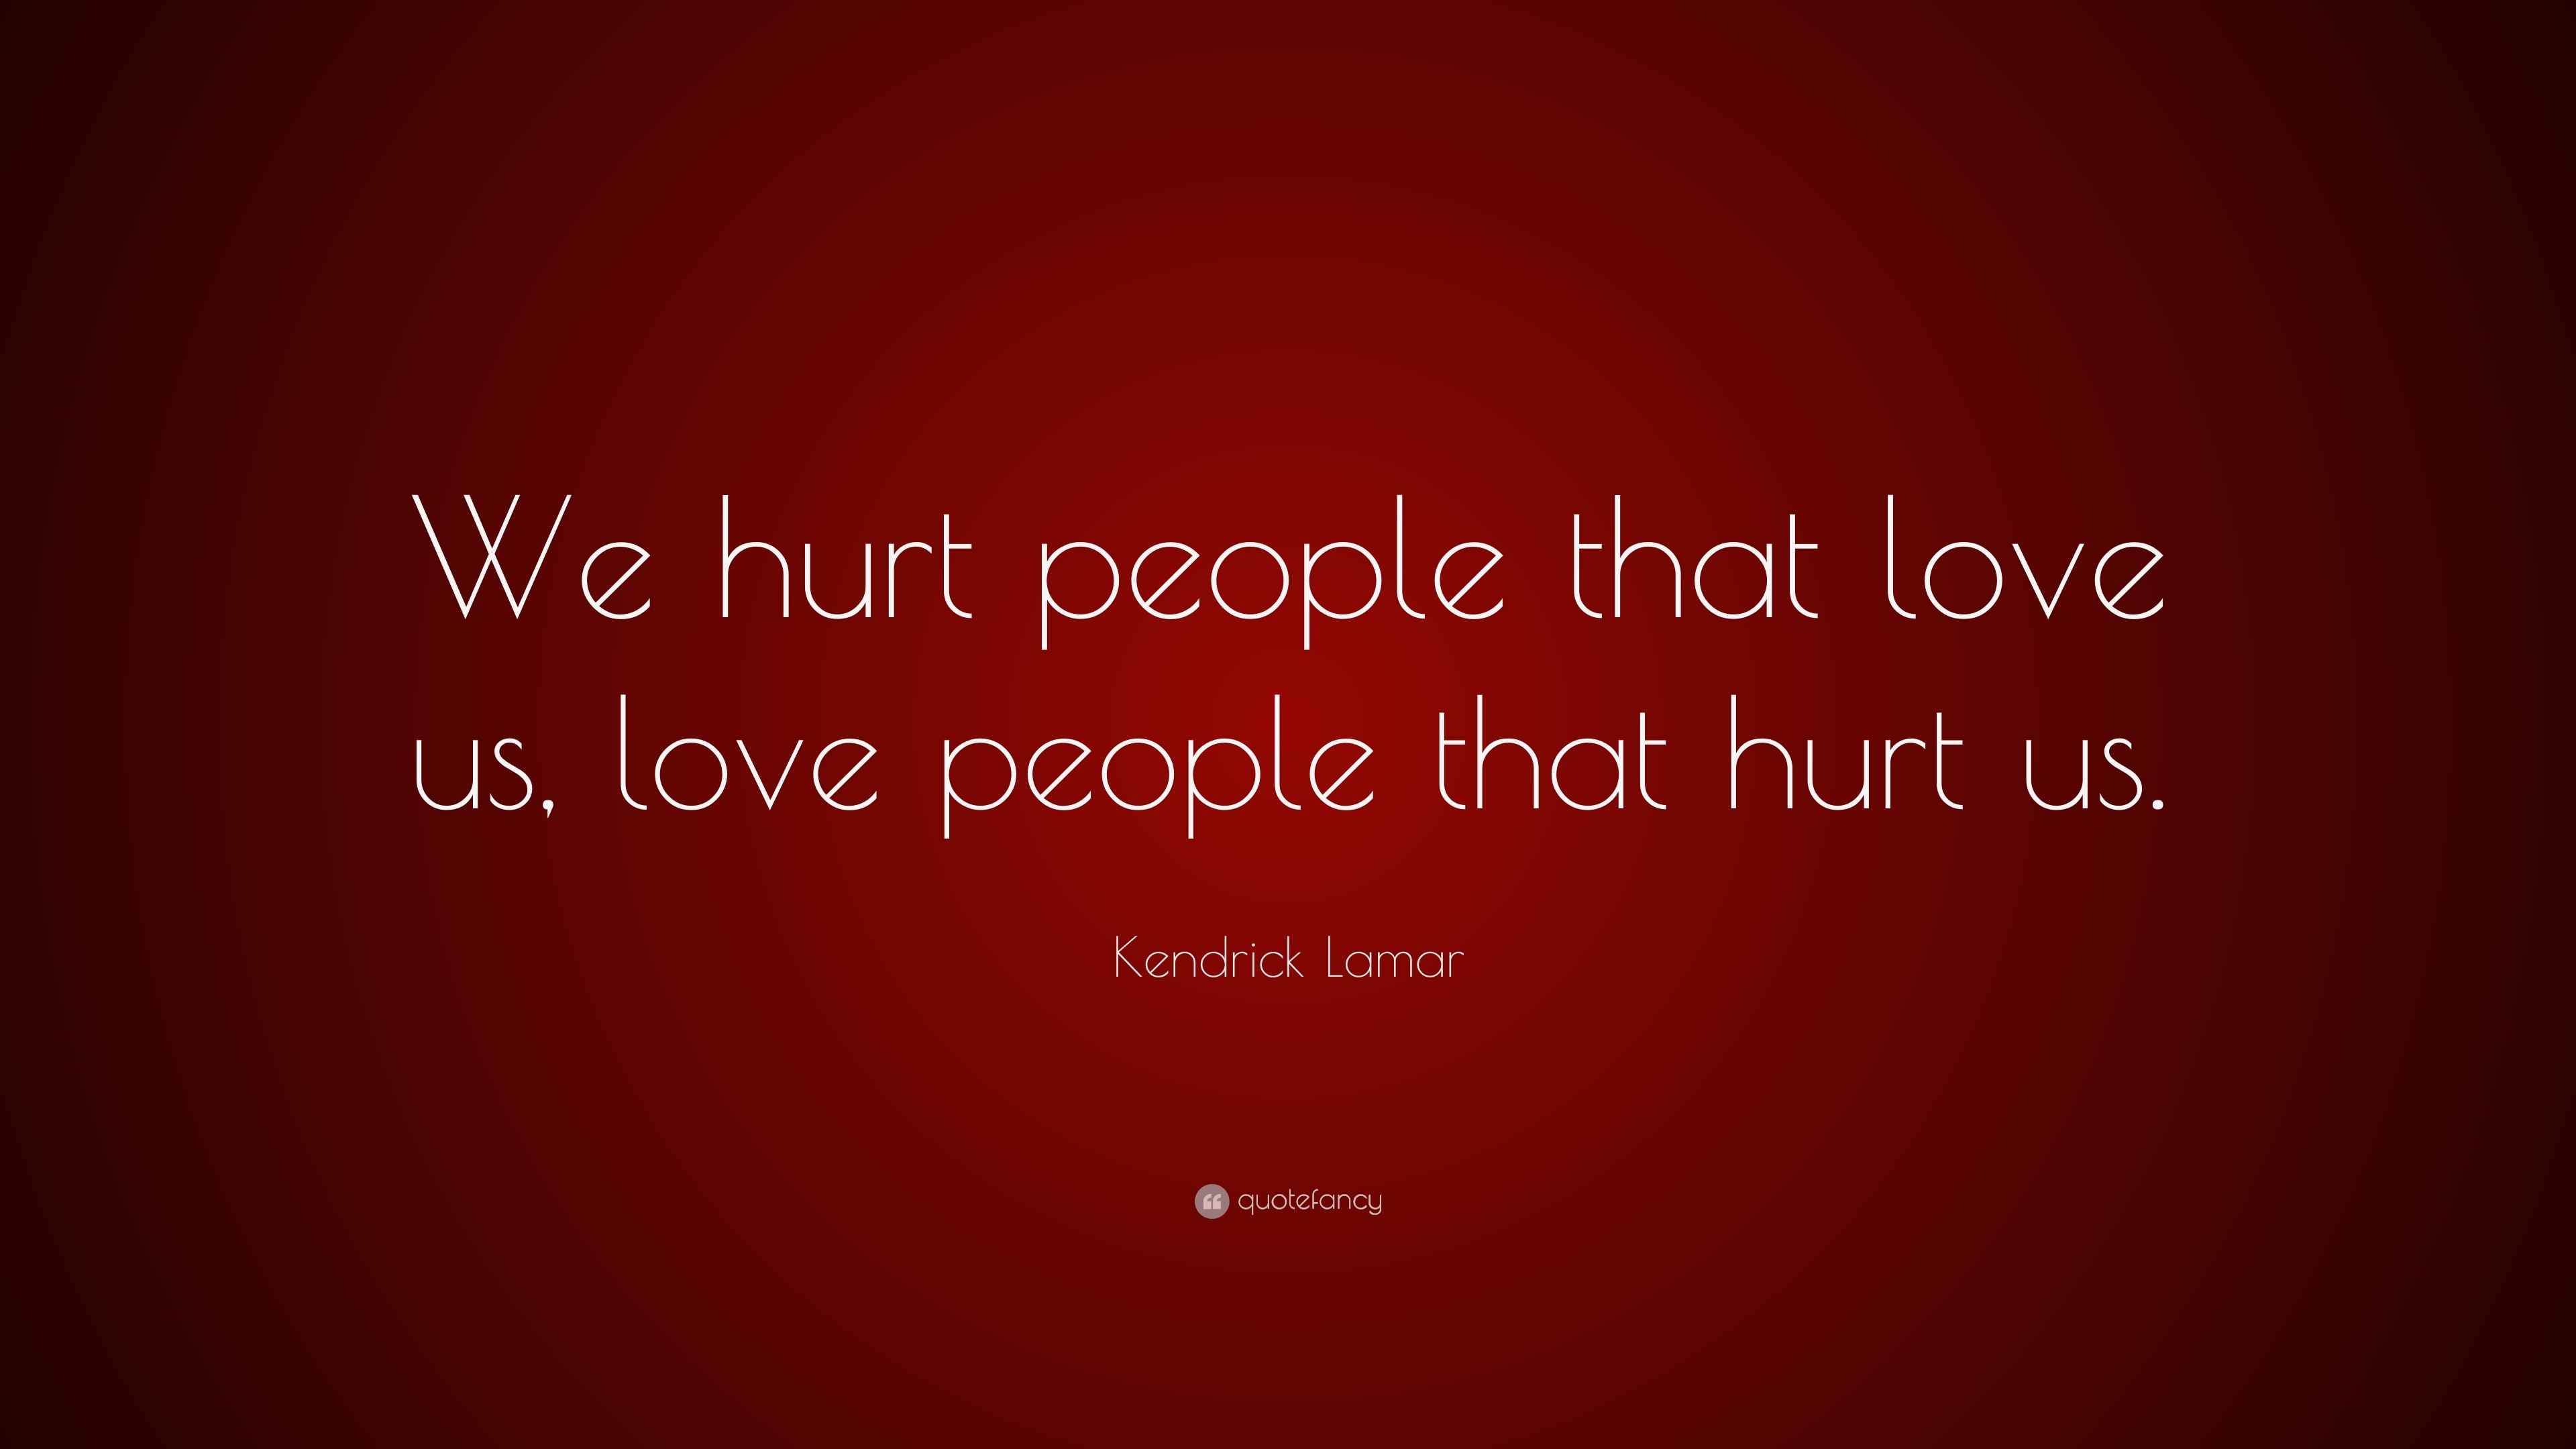 3840x2160 Kendrick Lamar Quote: “We hurt people that love us, love people that hurt